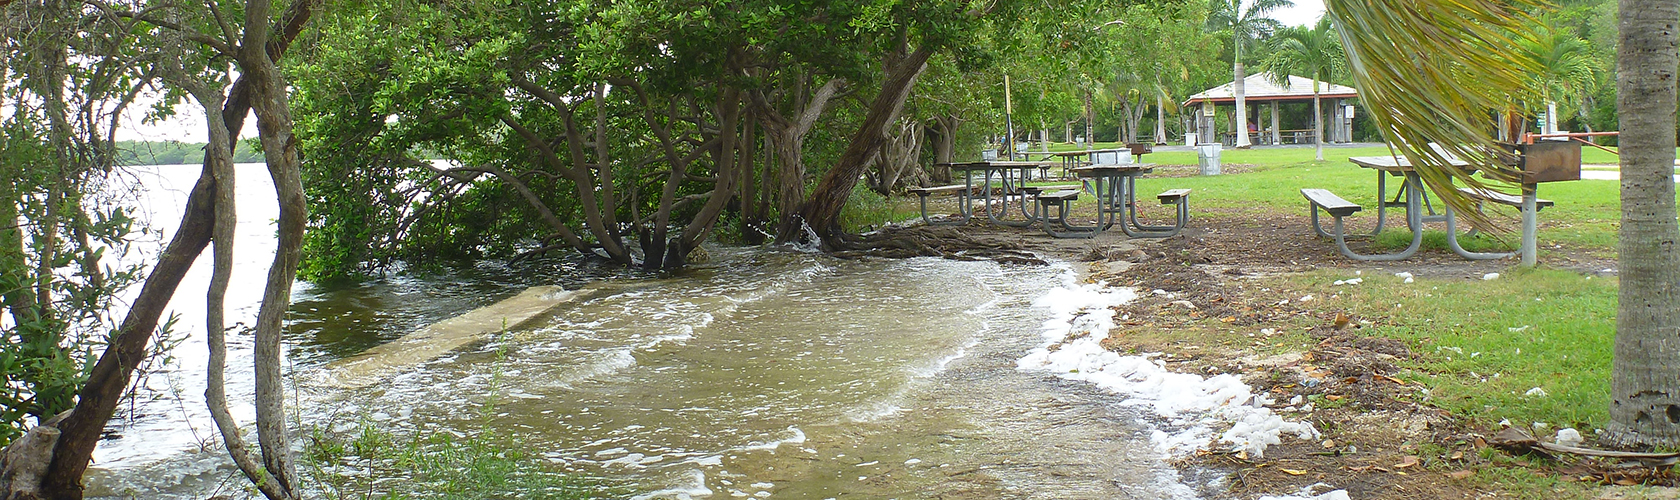 tidal flooding occurring at Florida coastline